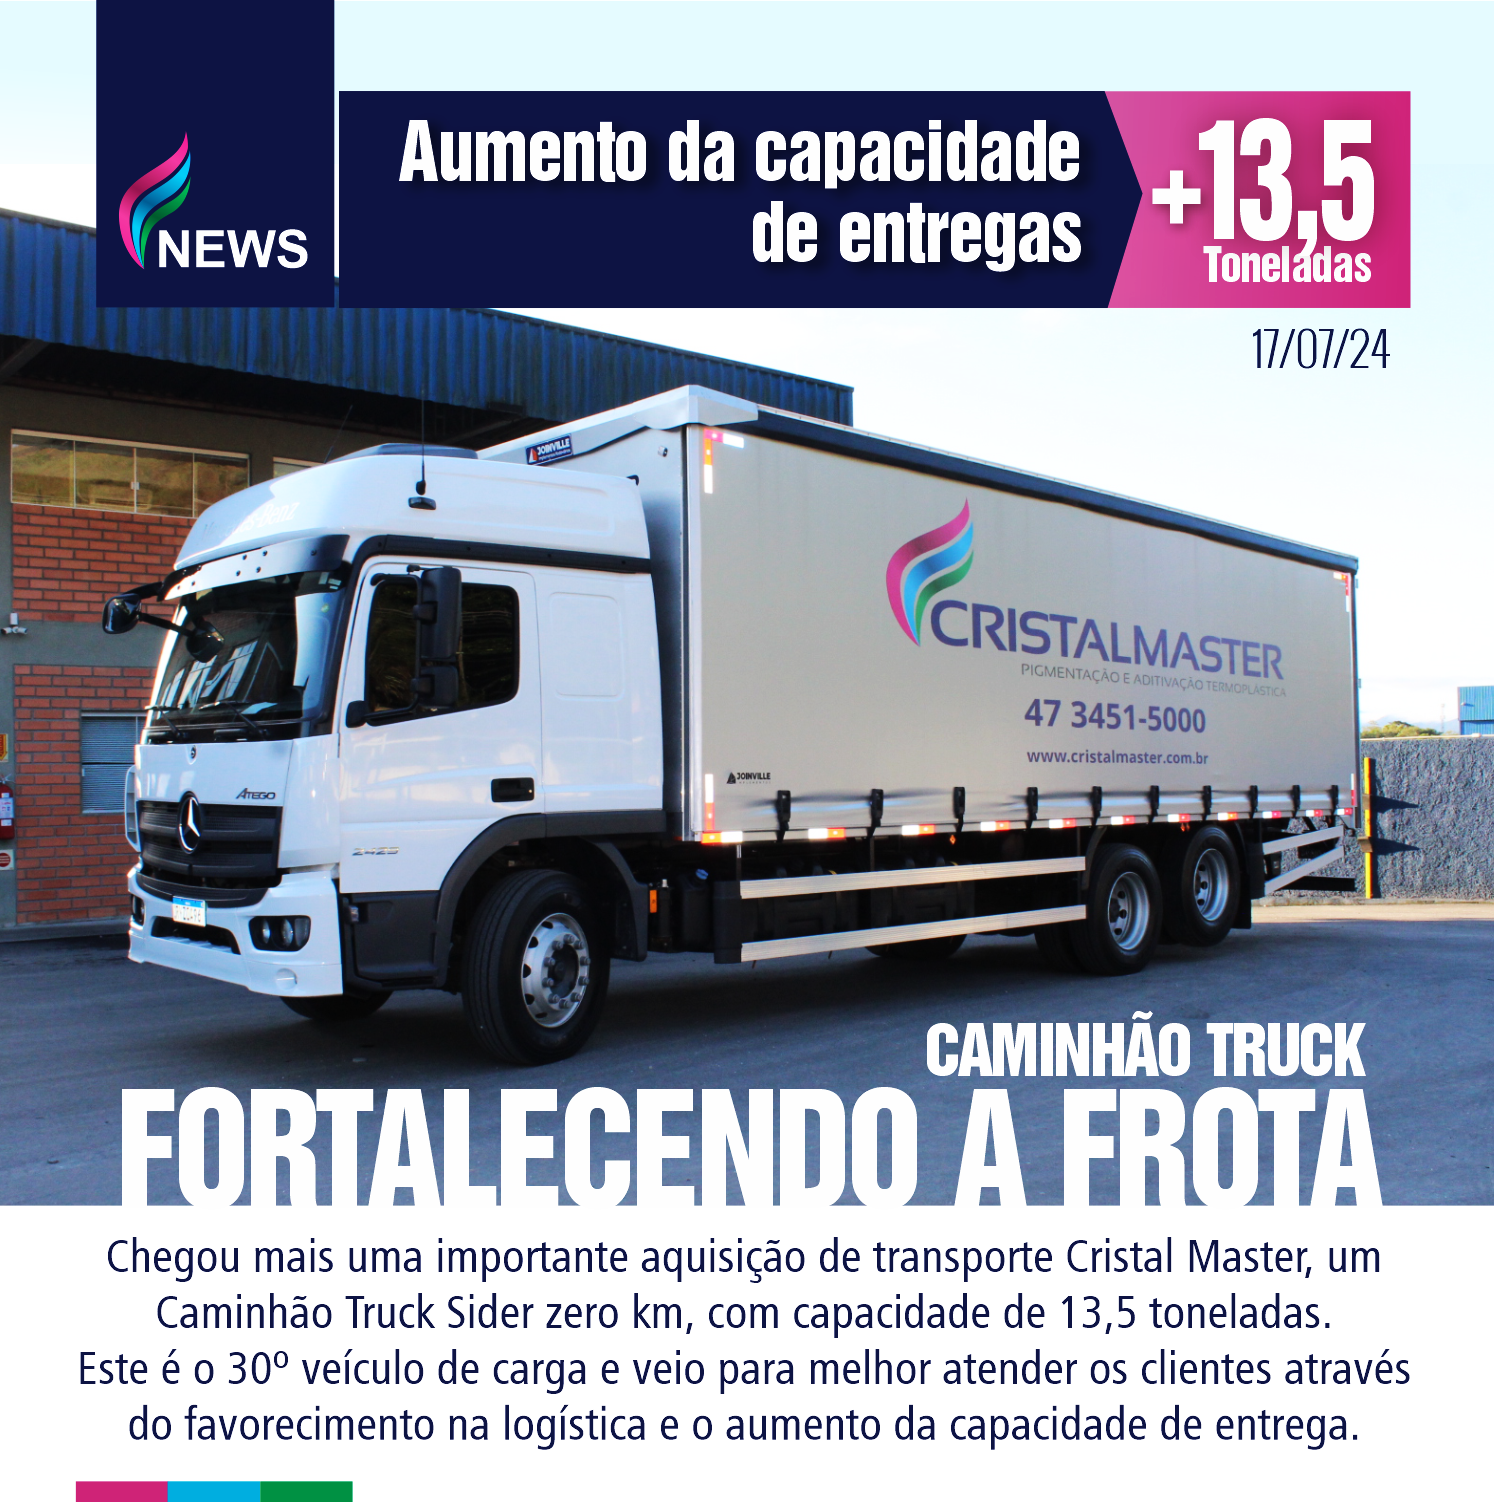 NEW - Novo Truck 13,5 Toneladas - 17/07/24